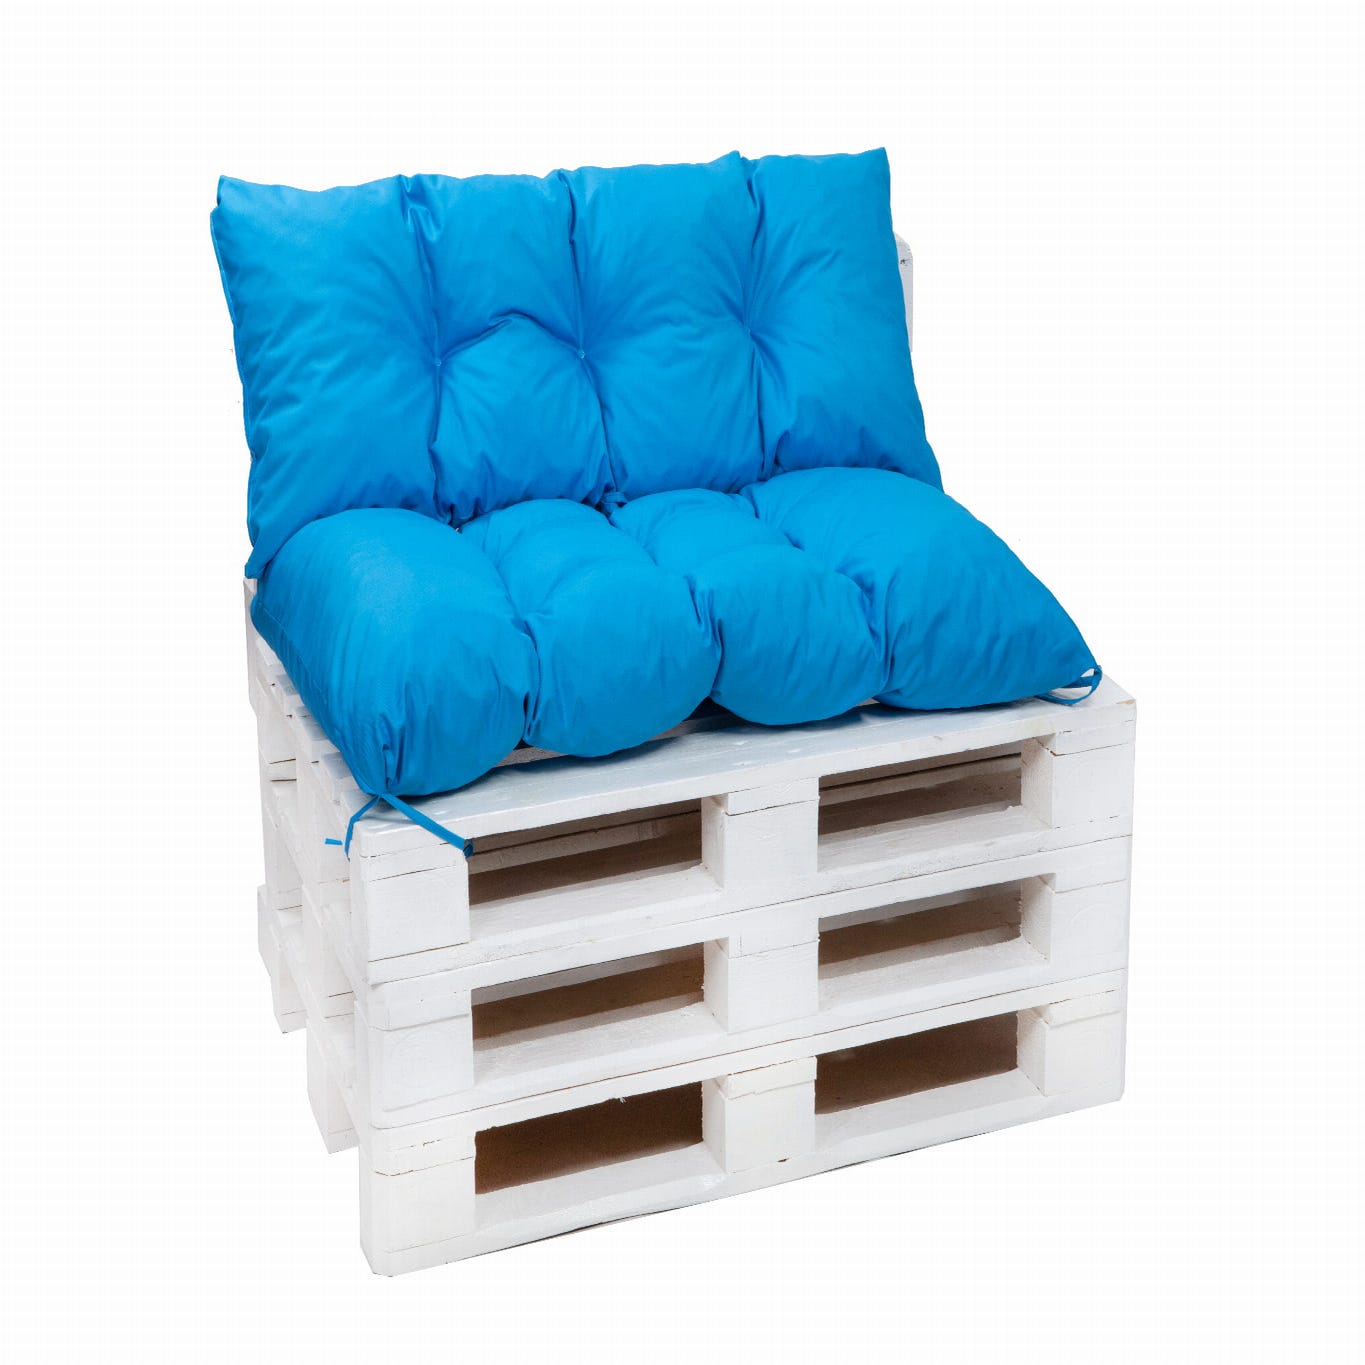 Set cuscino e schienale per divano pallet blu. Seduta pallet cm 120 x 80,  schienale 50 cm.